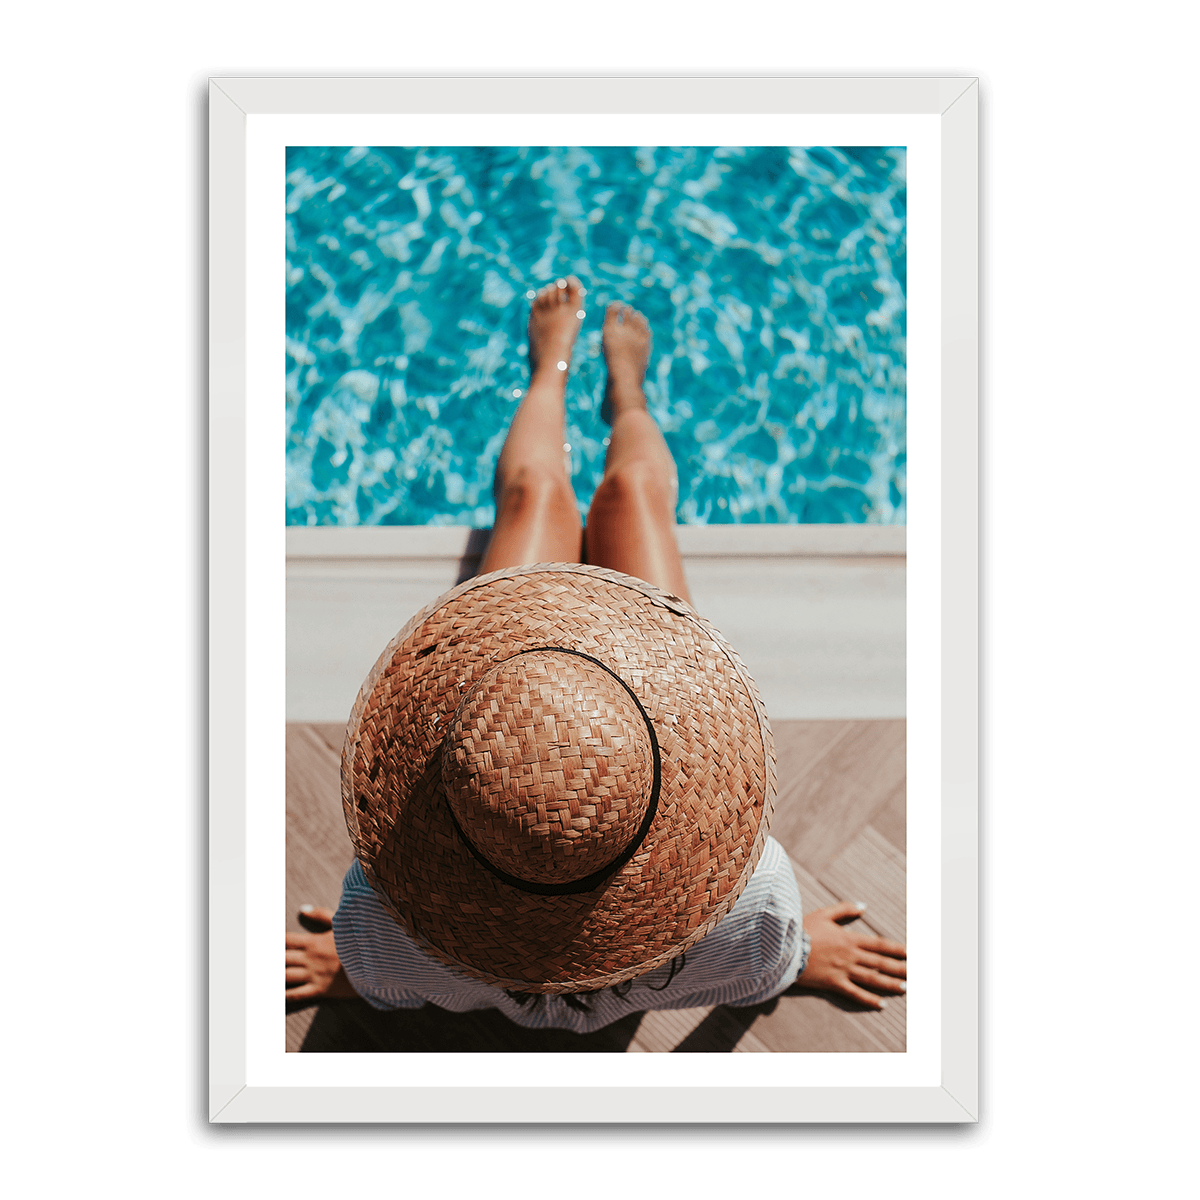 Summer Serenity: Poolside Leisure - PixMagic